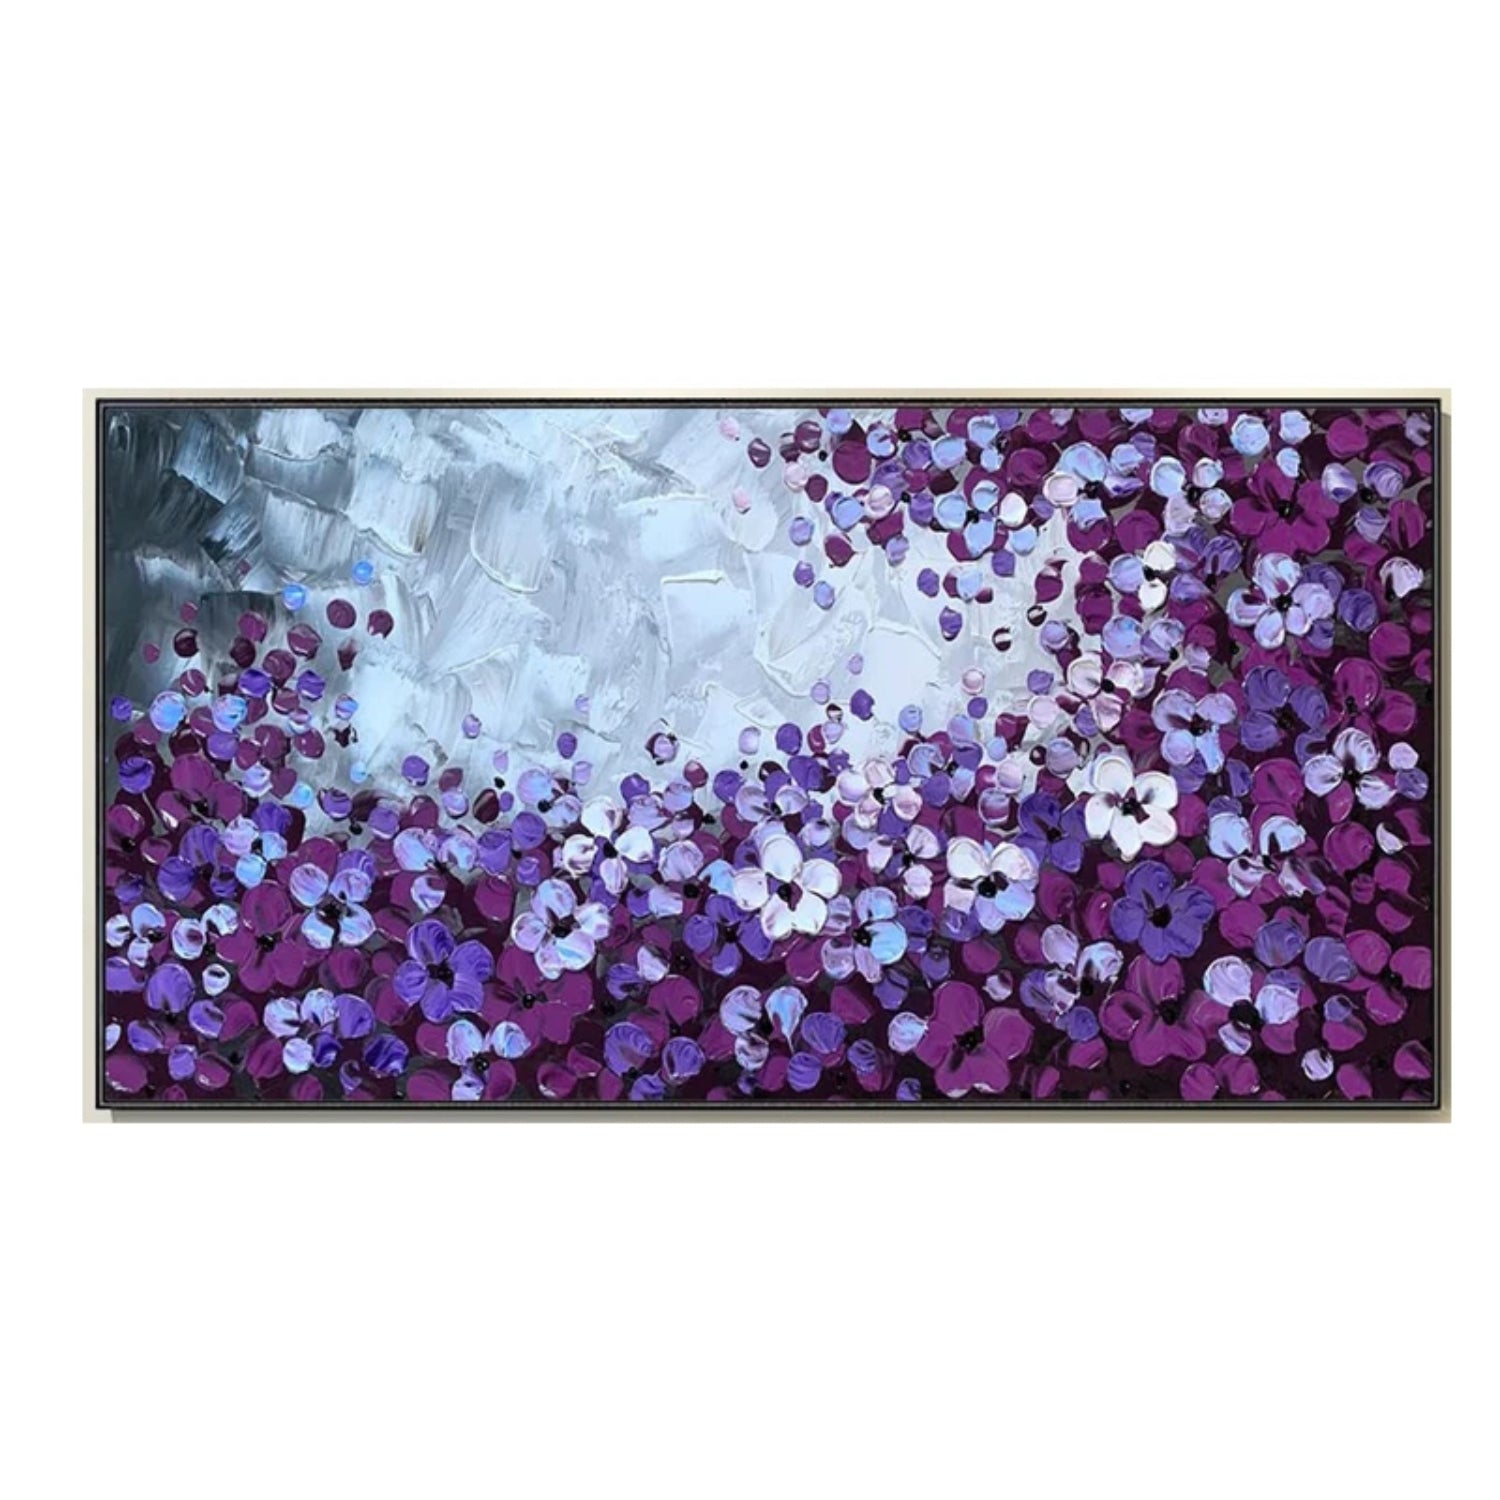 Abstract Purple Blossom Petals Textured Floral Art